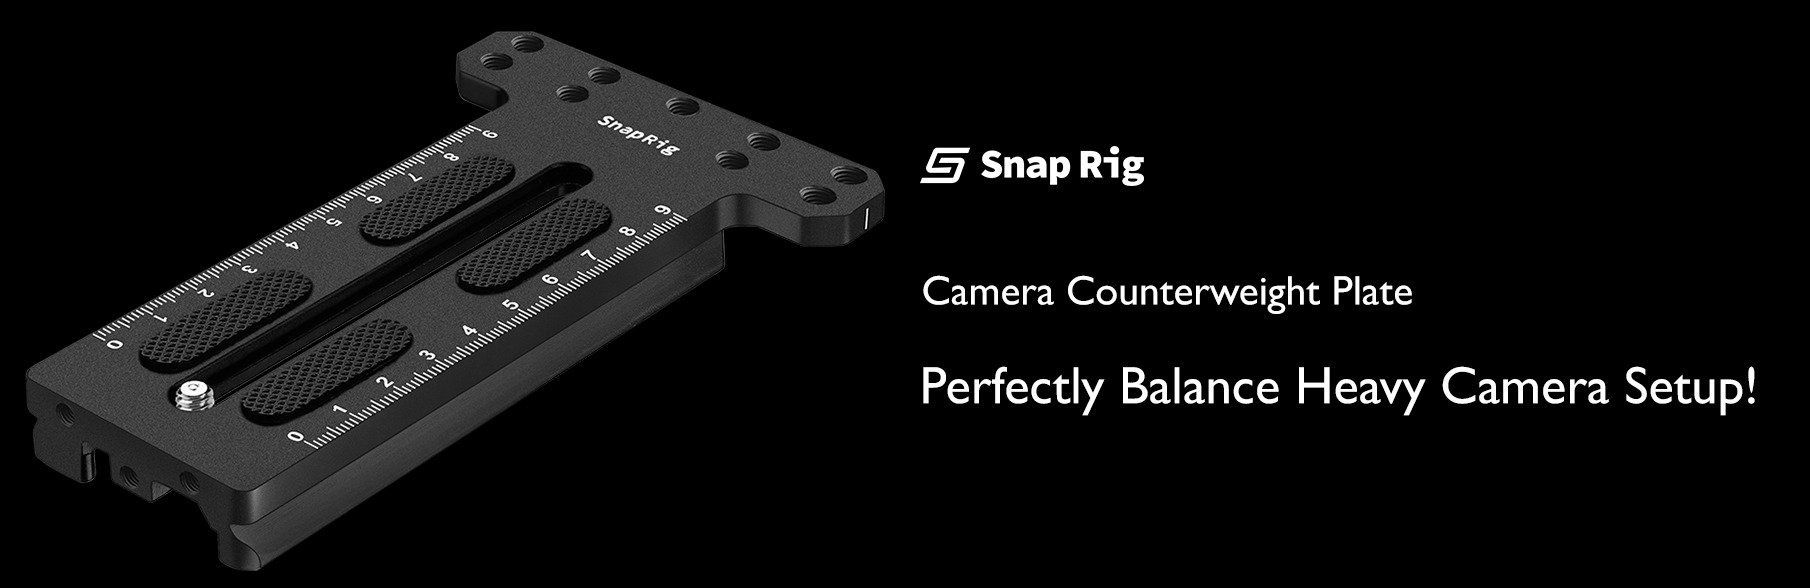 Proaim SnapRig Camera Plate Counterweight Mounting for DJI Ronin-S Gimbal. MP224.